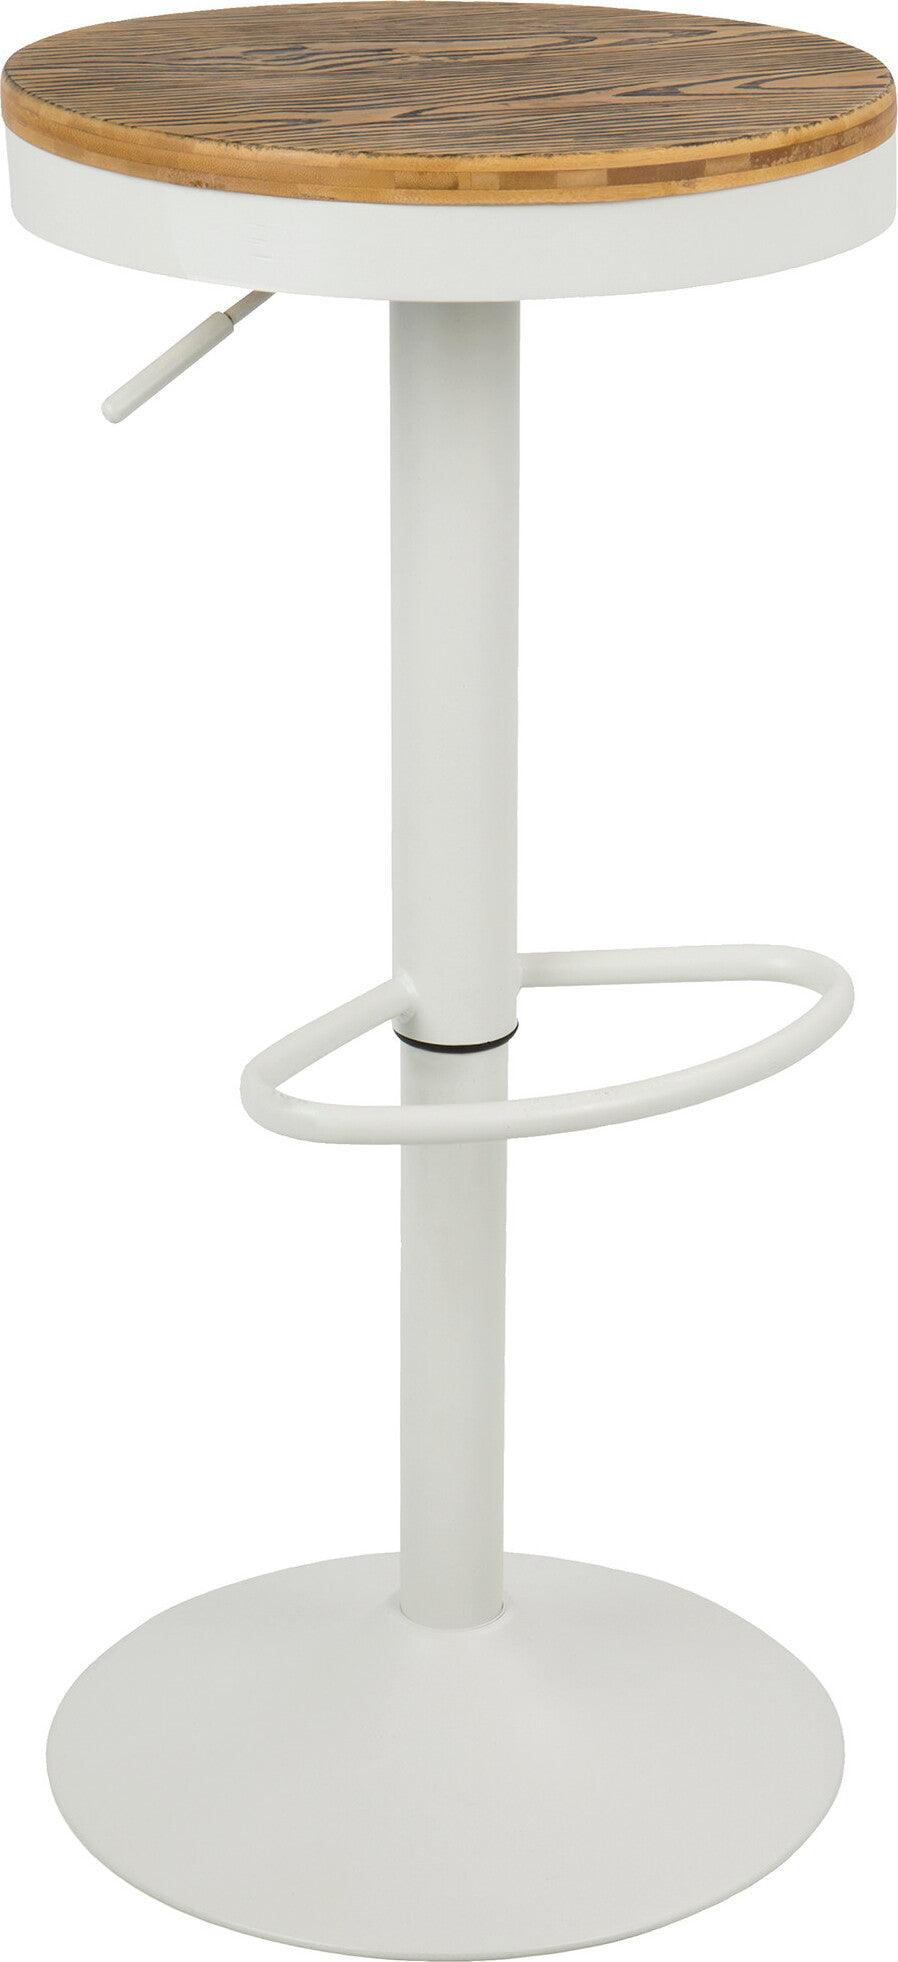 Lumisource Barstools - Dakota Industrial Adjustable Barstool with Swivel in White (Set of 2)